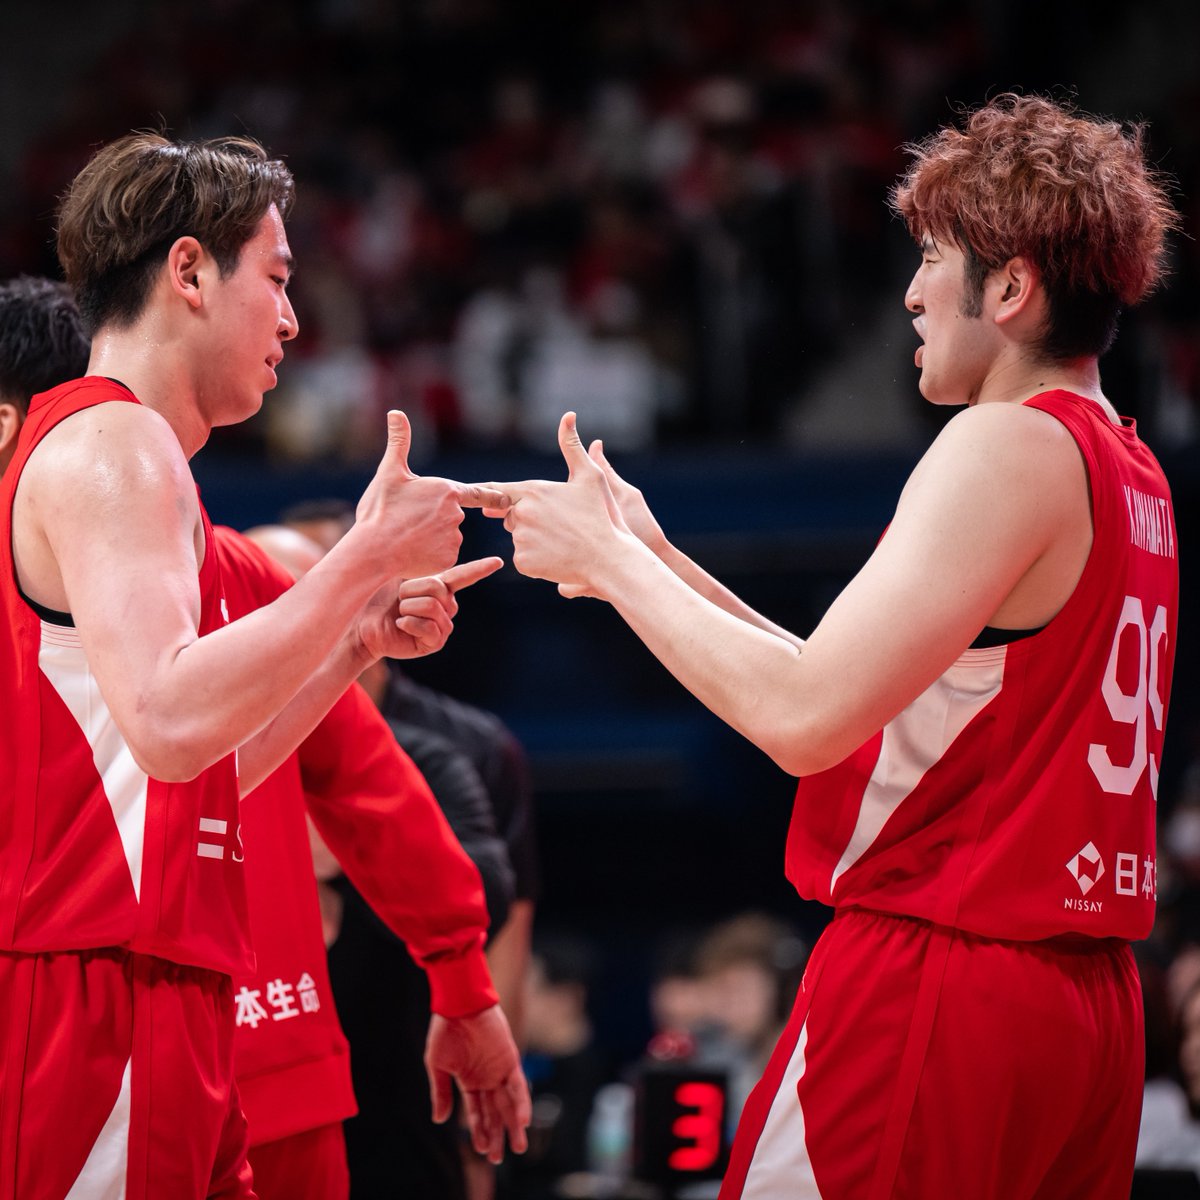 📸Good Job 👍Mikey 初のスターティング5から、持ち味の泥臭いプレーで献身的なプレーを見せた #川真田紘也 獲得したフリースローは4/4で成功👏 川真田選手の挑戦は続きますが、その闘志を継いでレイクスは明日あさっての決戦に挑みます🔥 @FIBAasiacup #AsiaCup #日本一丸 #バスケで日本を元気に